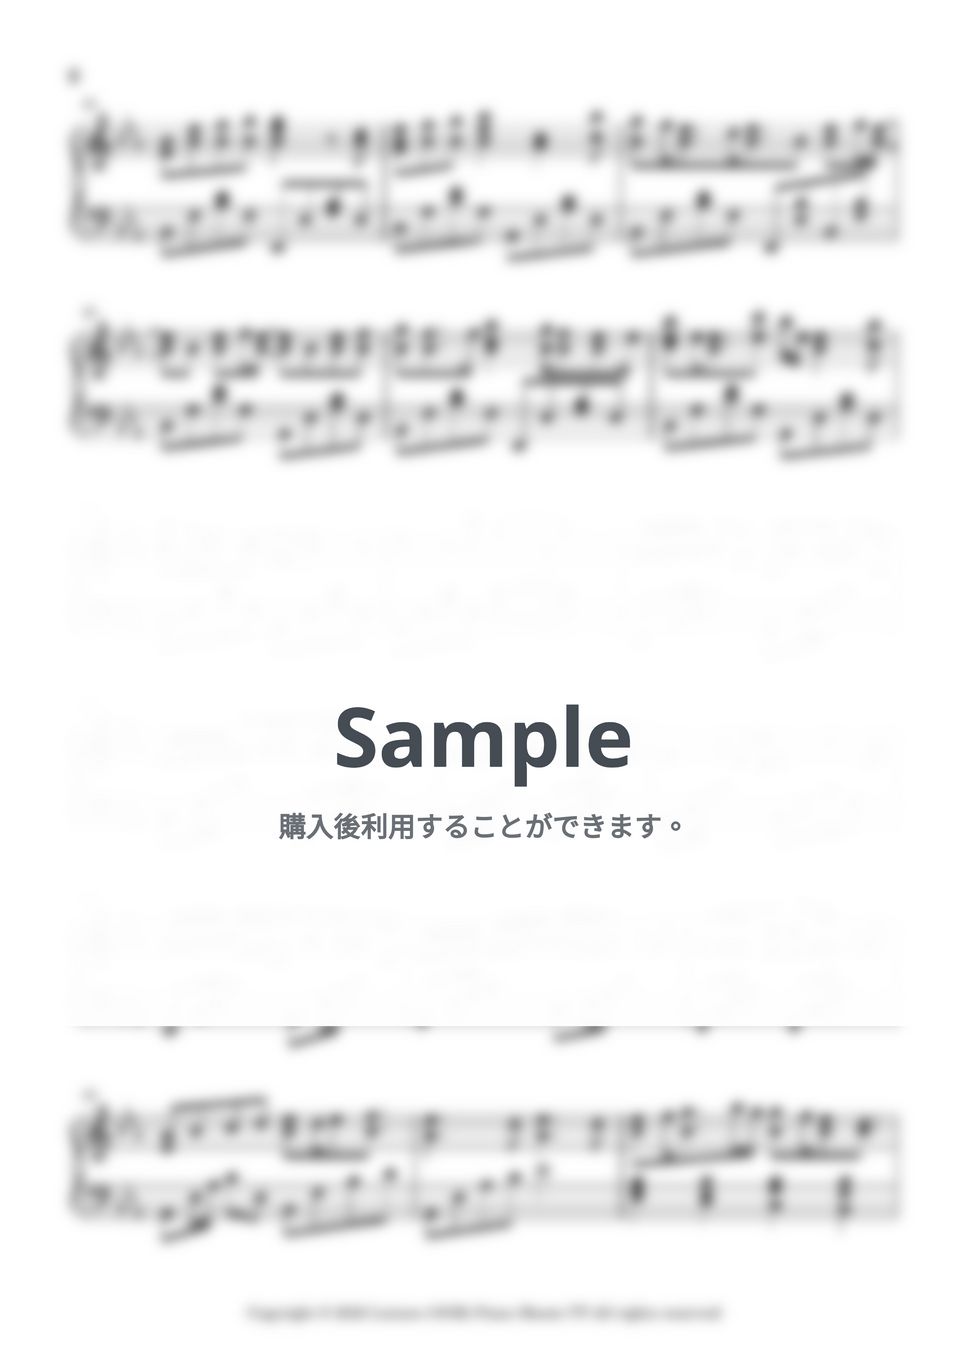 BAK - パラレルワールド by Leisure (OOR) Piano Sheets YT